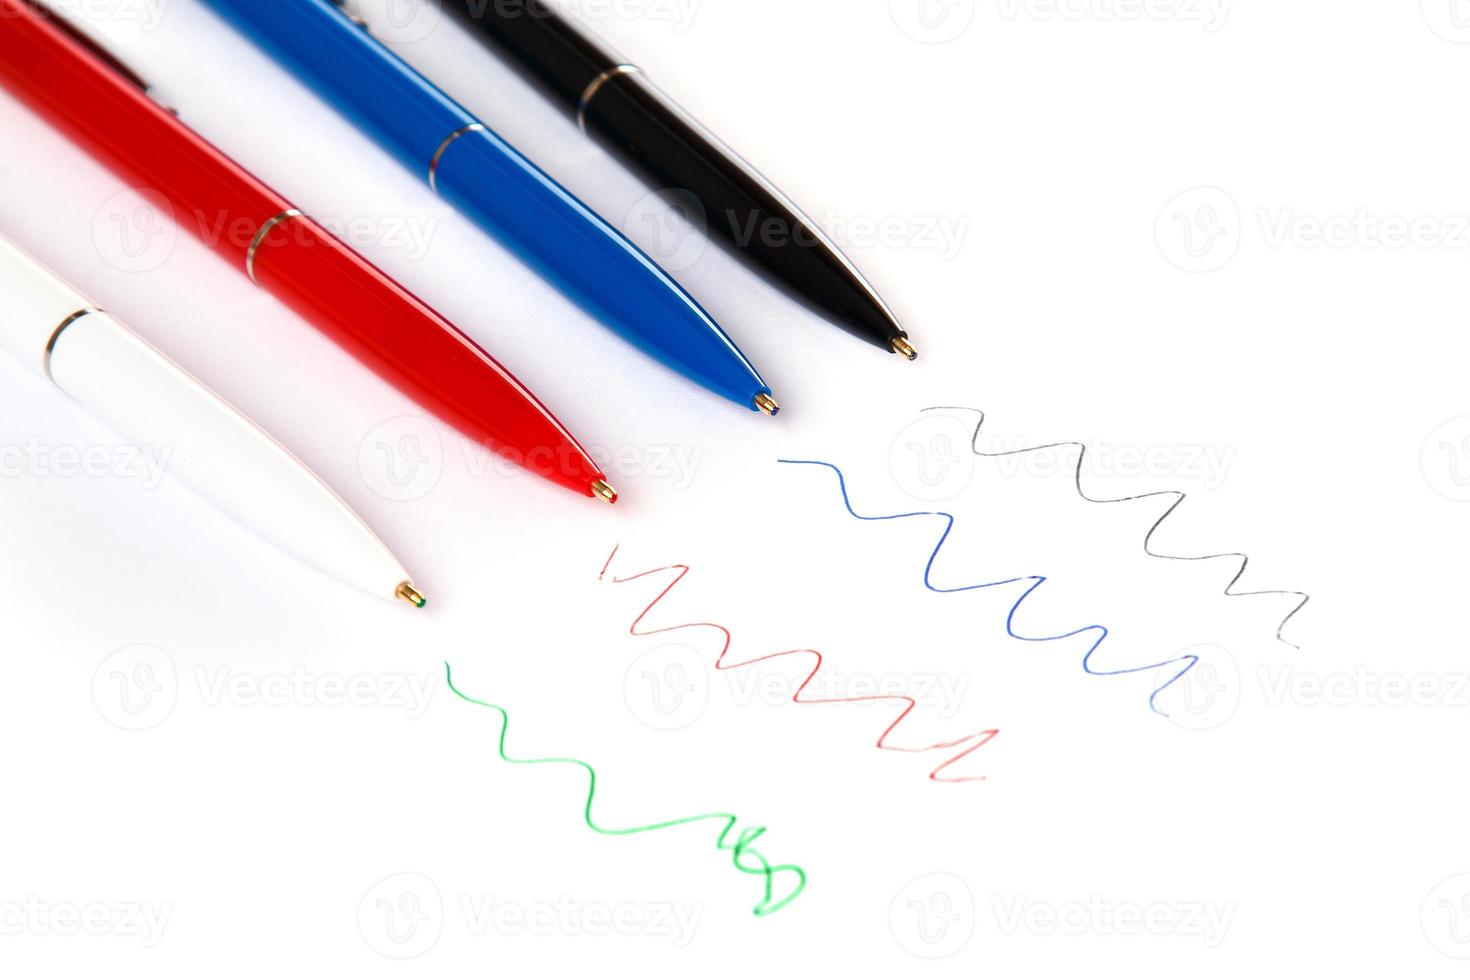 canetas esferográficas de cores diferentes foto